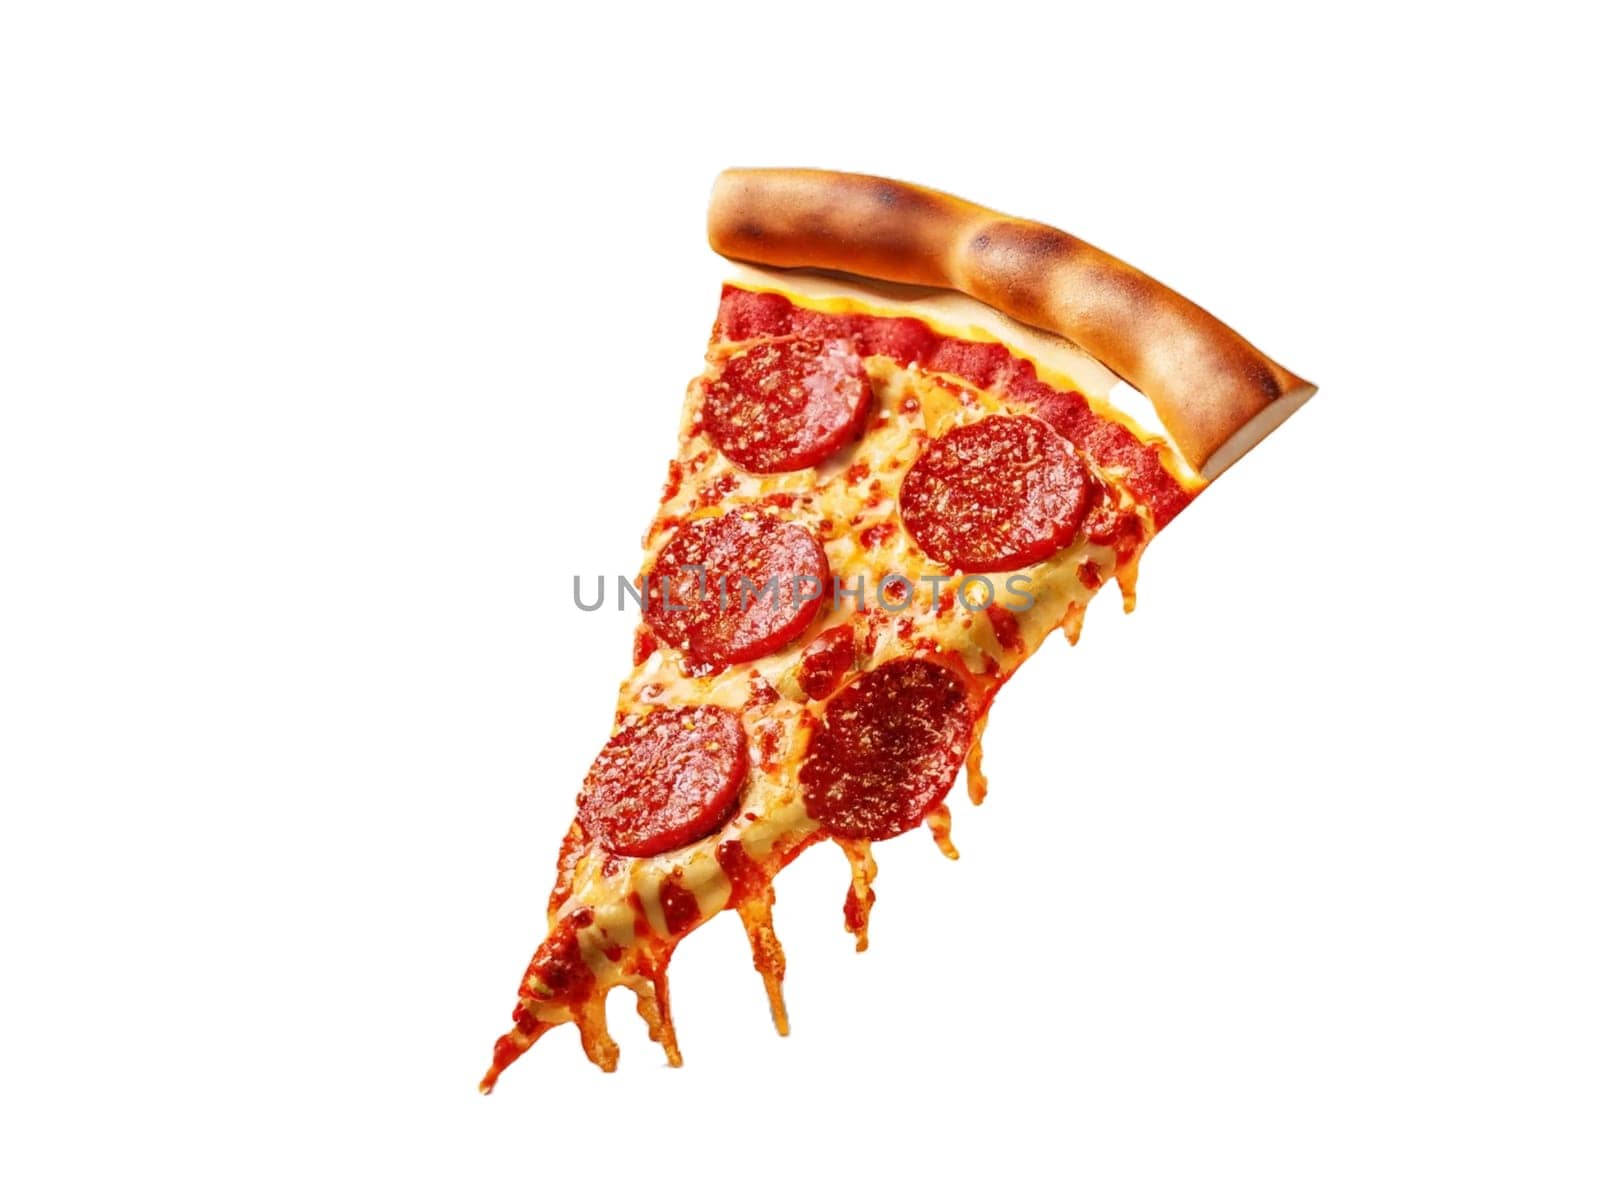 Slice of fresh italian classic original Pepperoni Pizza isolated on white background png image. High quality image